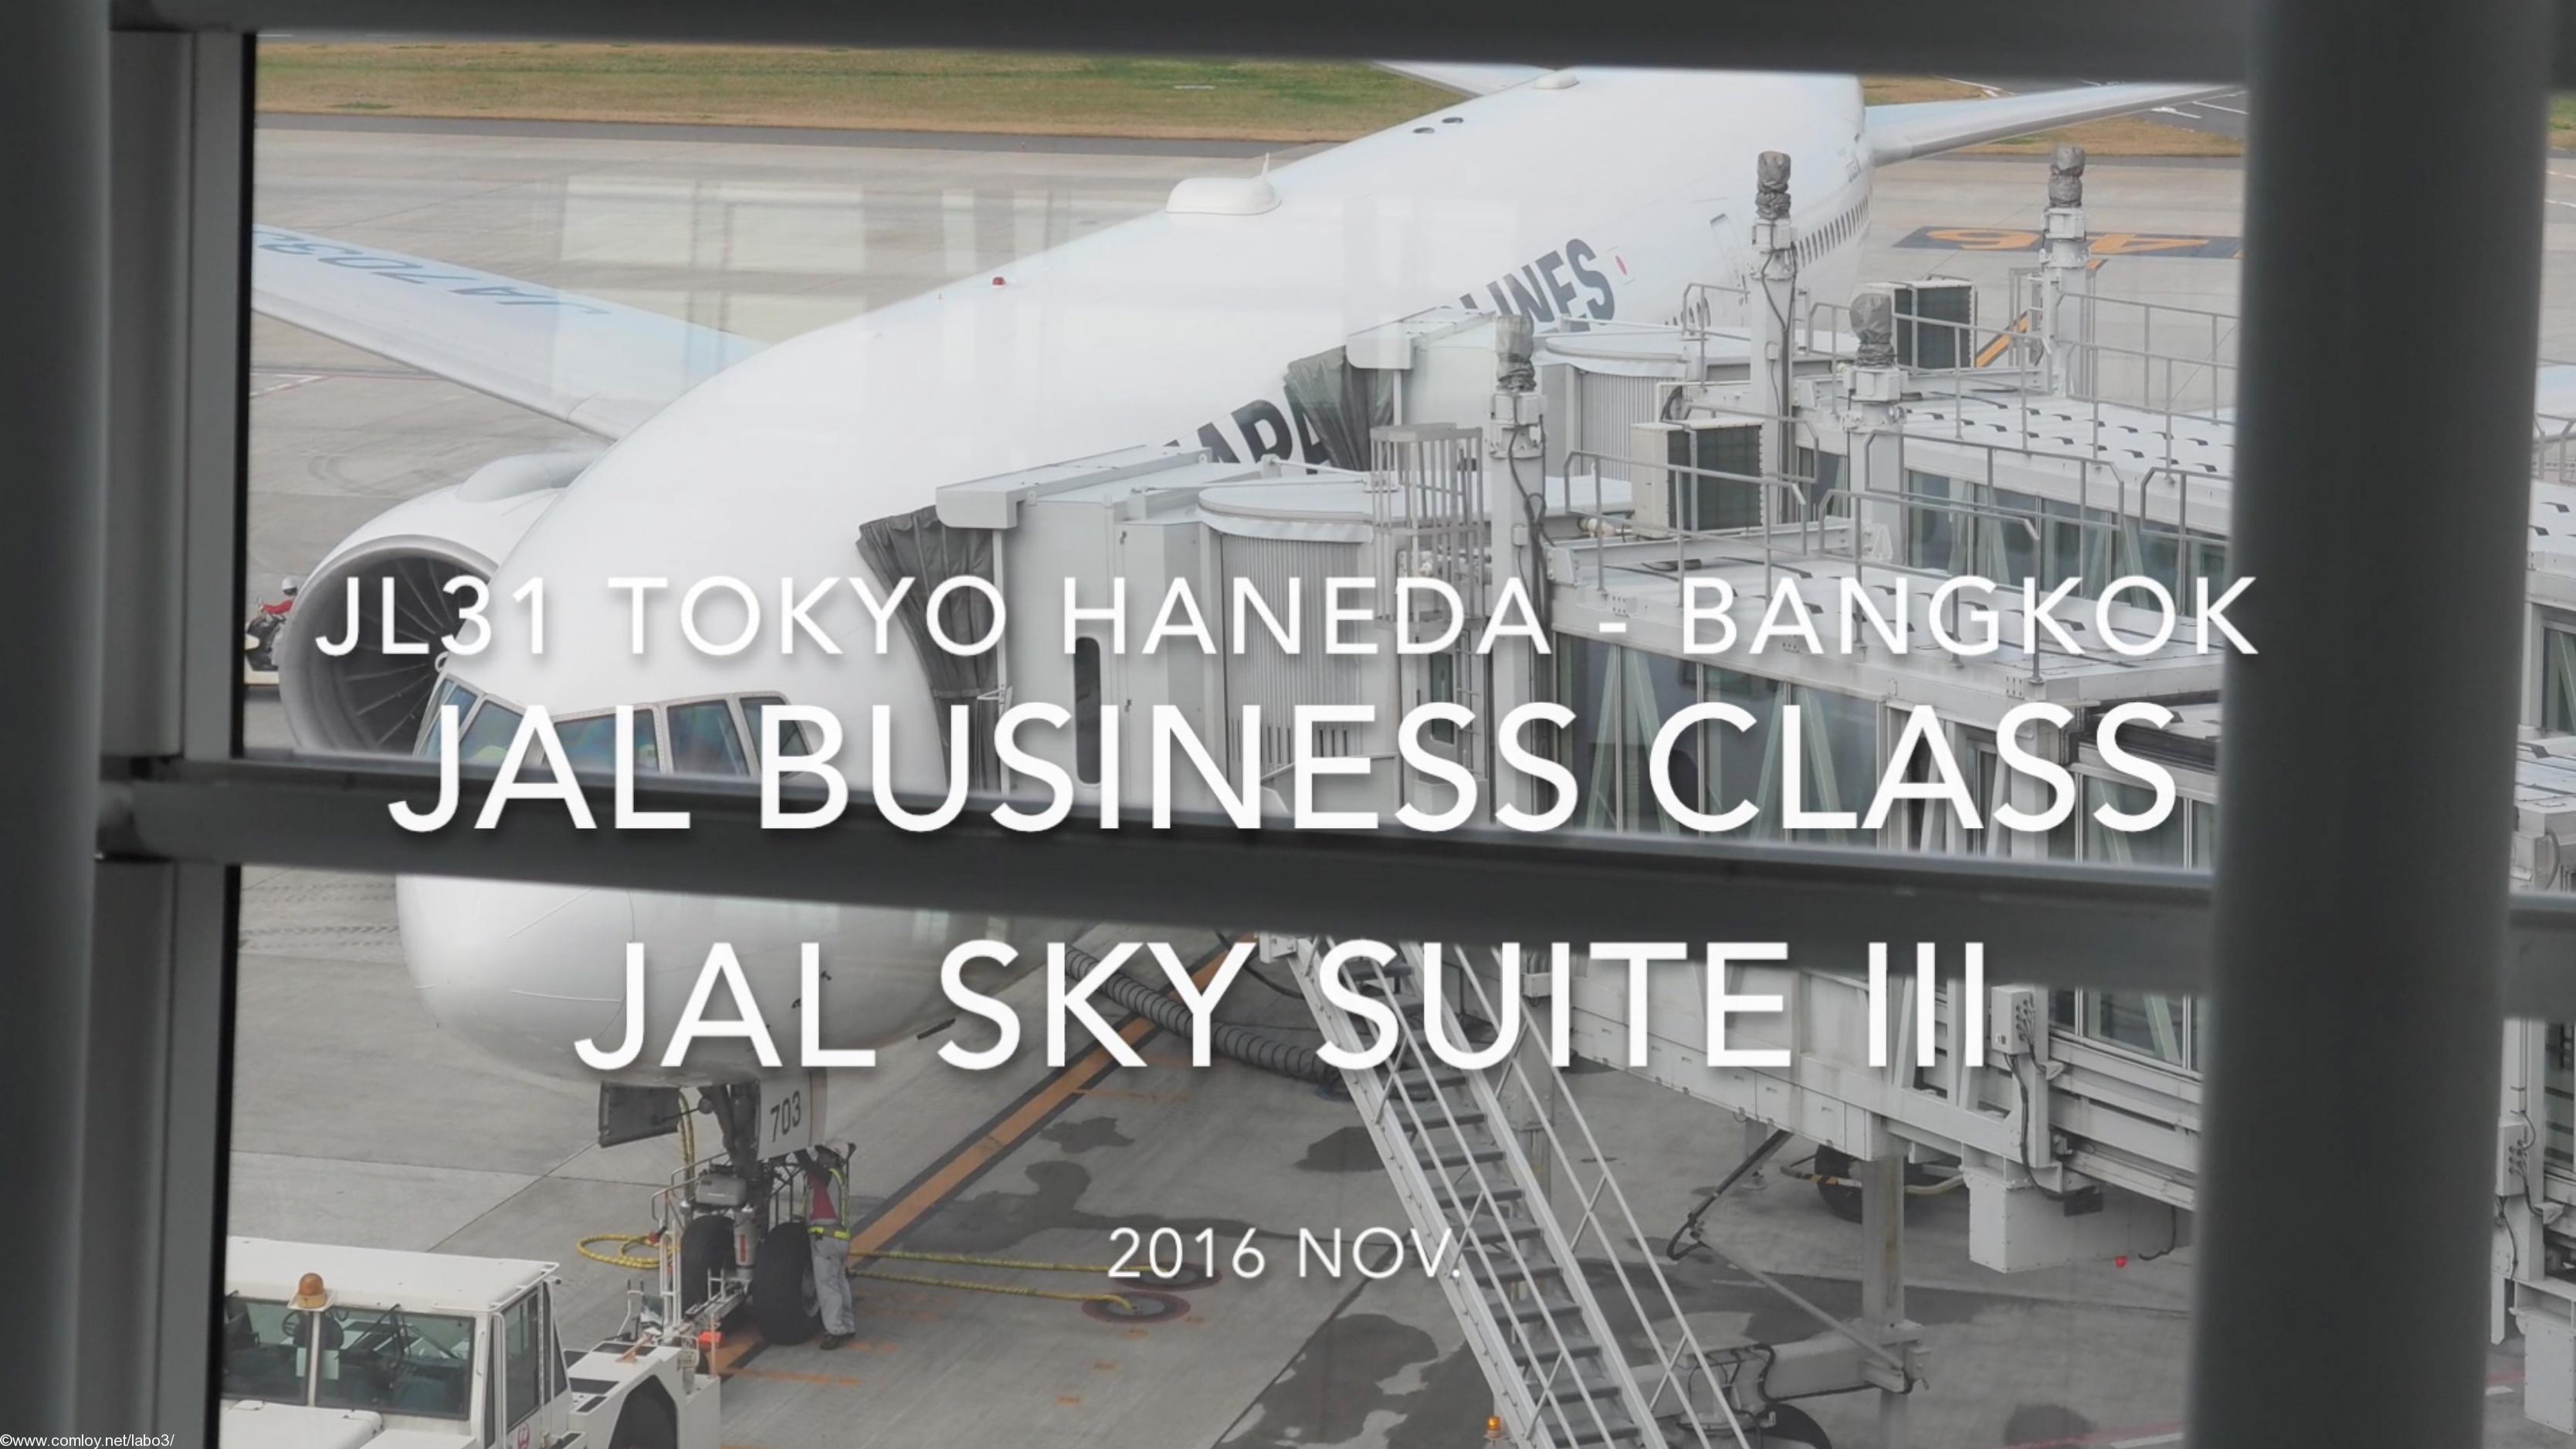 【Flight Report】JAL Business Class JAL SKY SUITE Ⅲ JL31 TOKYO HANEDA - BANGKOK 2016・11 日本航空 ビジネスクラス 搭乗記